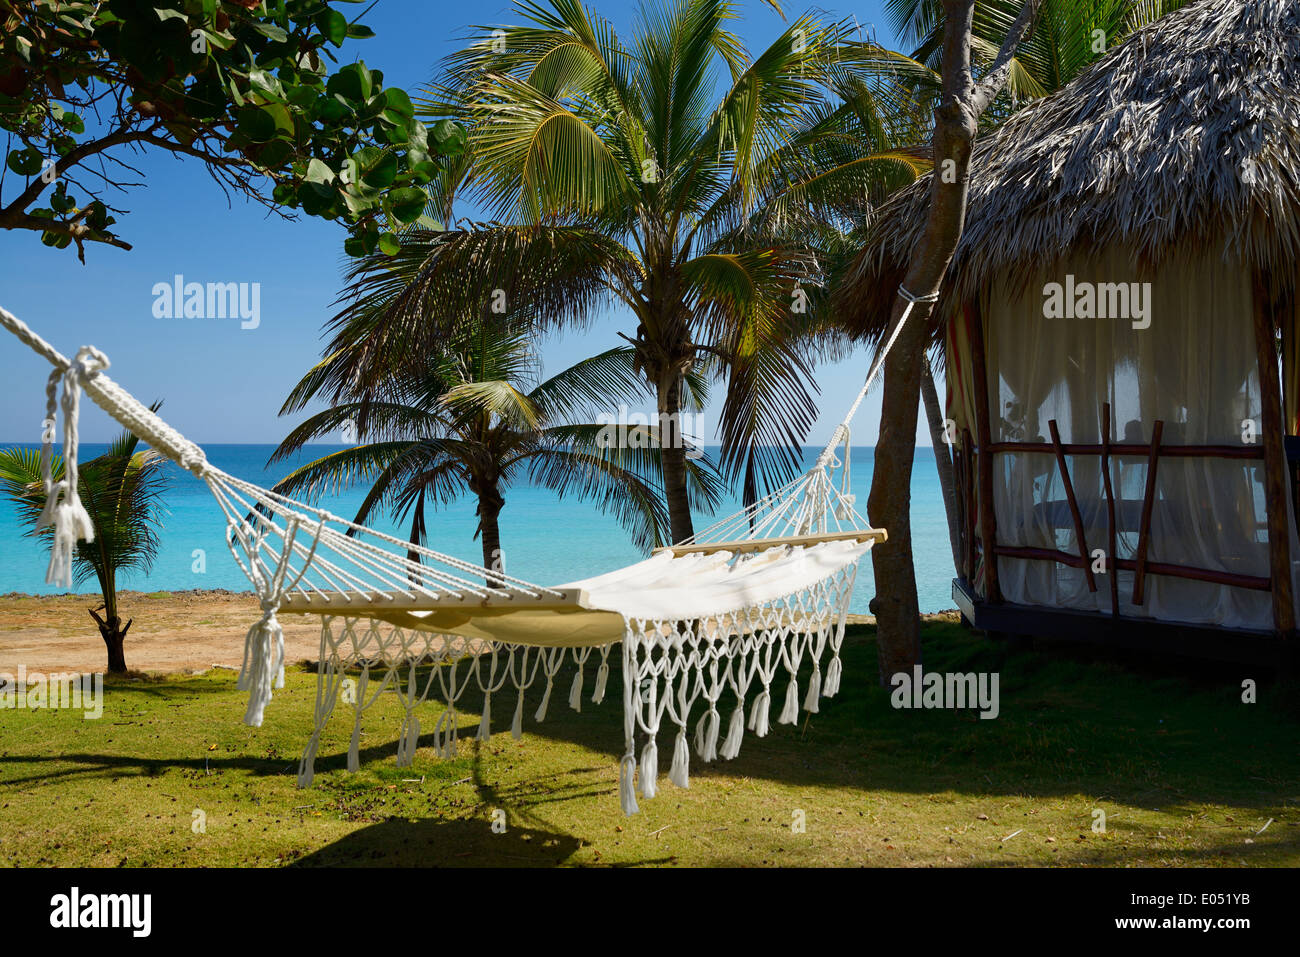 Cuba Varadero Beach Hut High Resolution Stock Photography and Images - Alamy